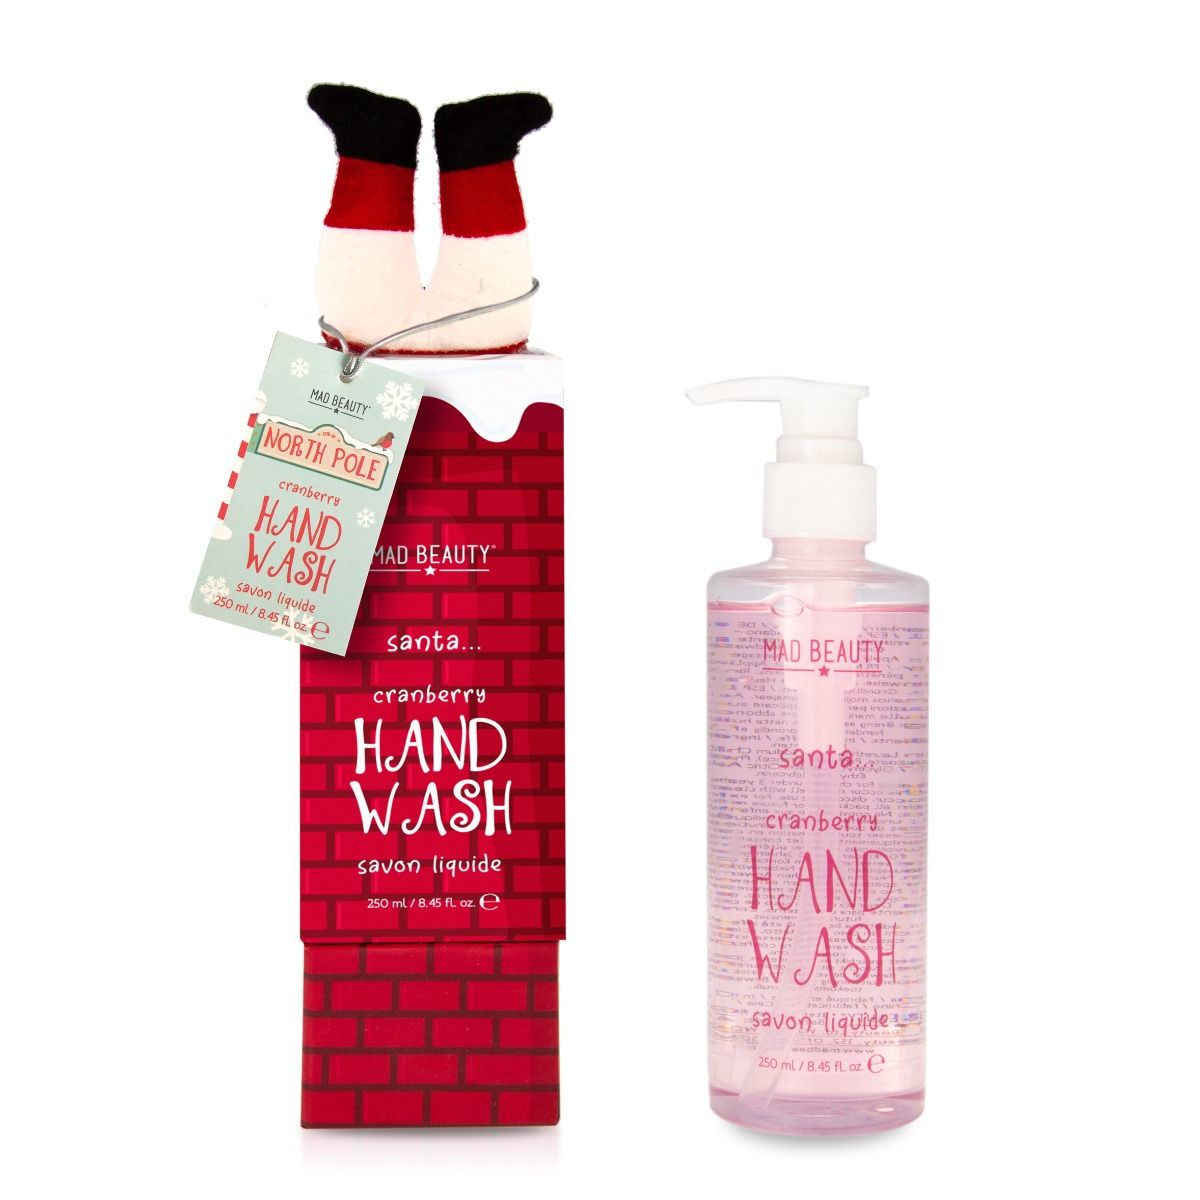 North Pole Cranberry Hand Wash 250ml | Mad Beauty